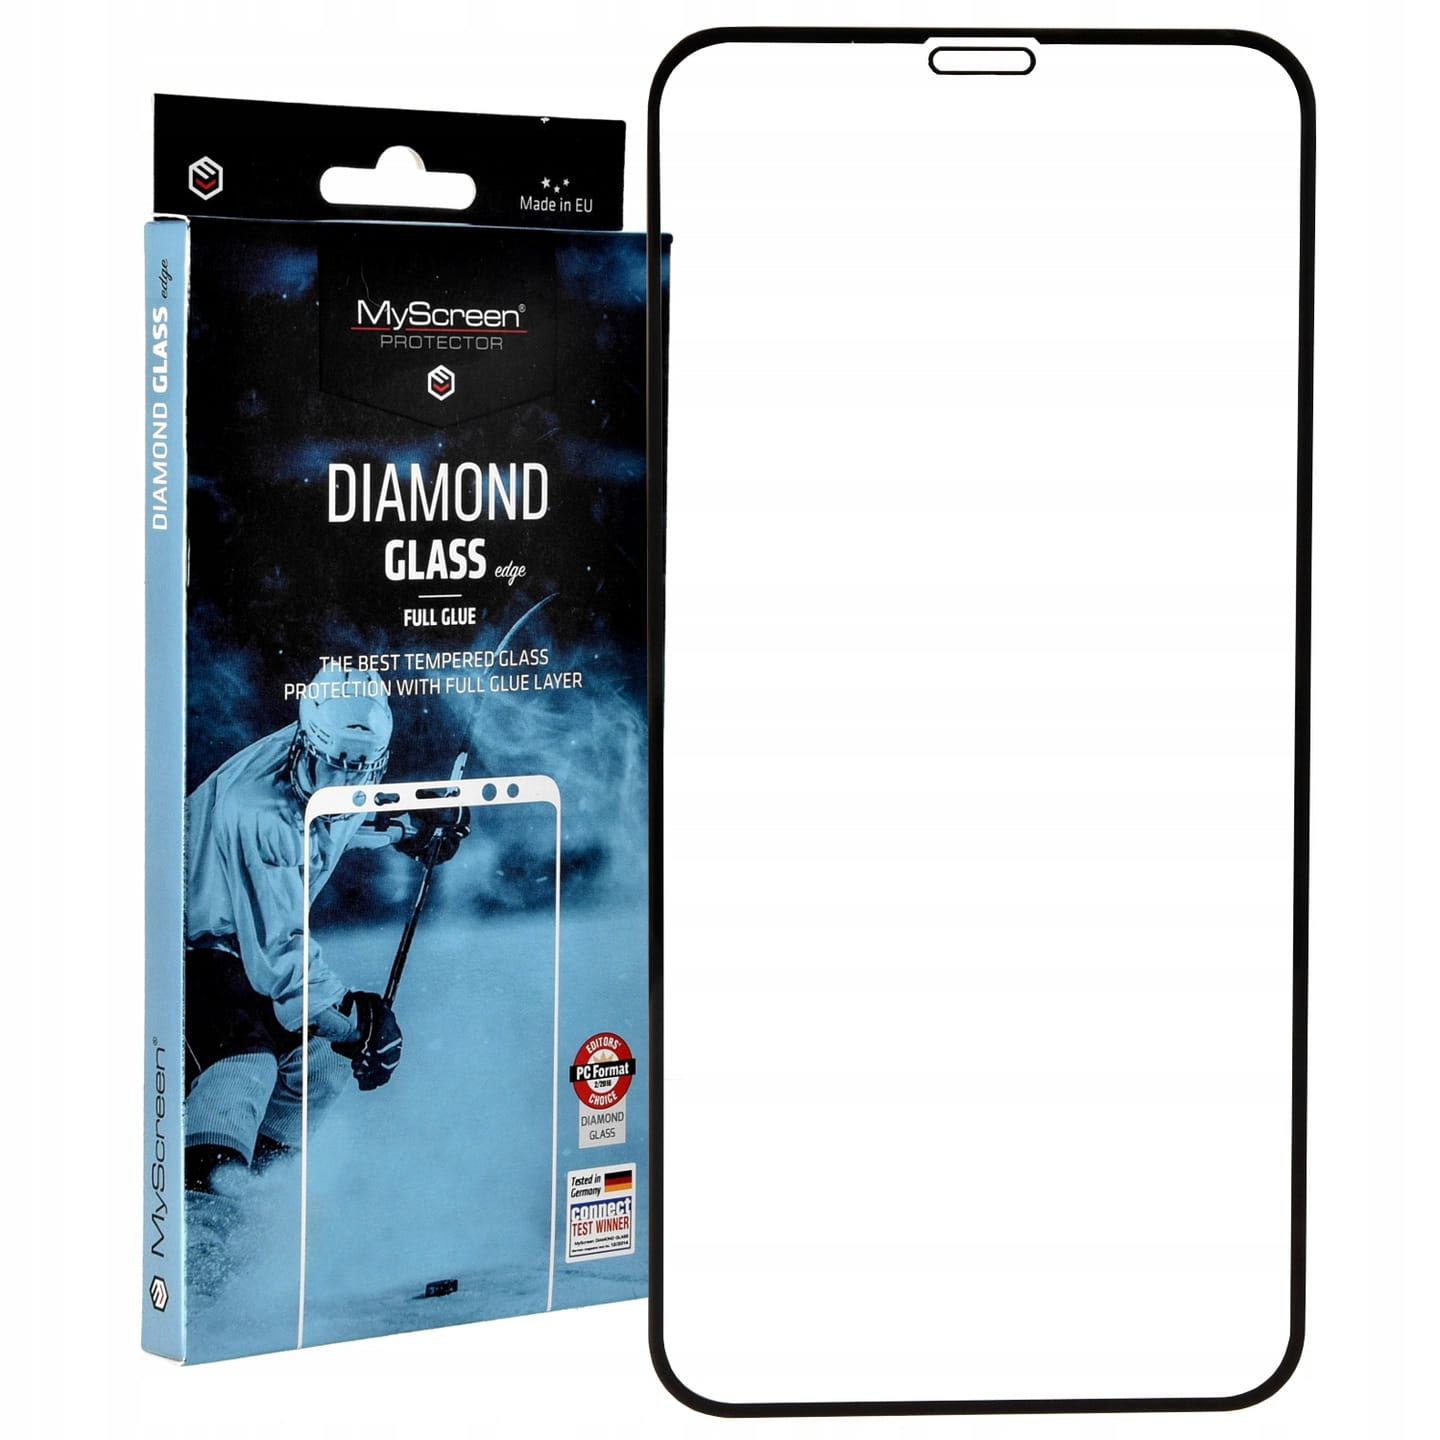 Glas MyScreen Diamond Glass Edge Full Glue füriPhone 11 Pro/Xs/X schwarzer Rahmen